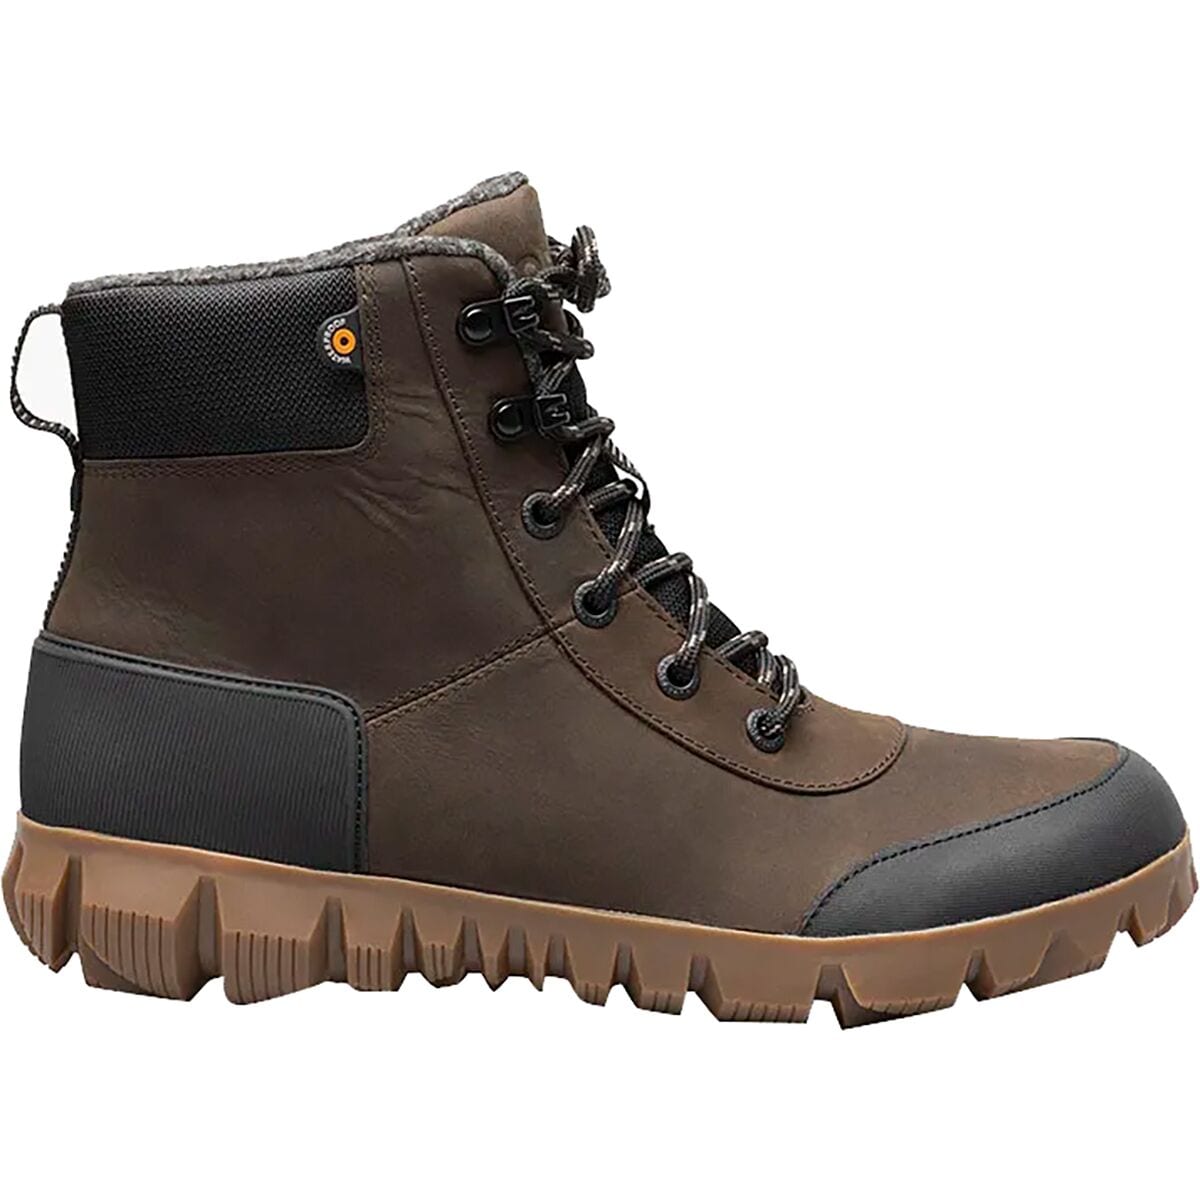 Arcata Urban Leather Mid Boot - Men